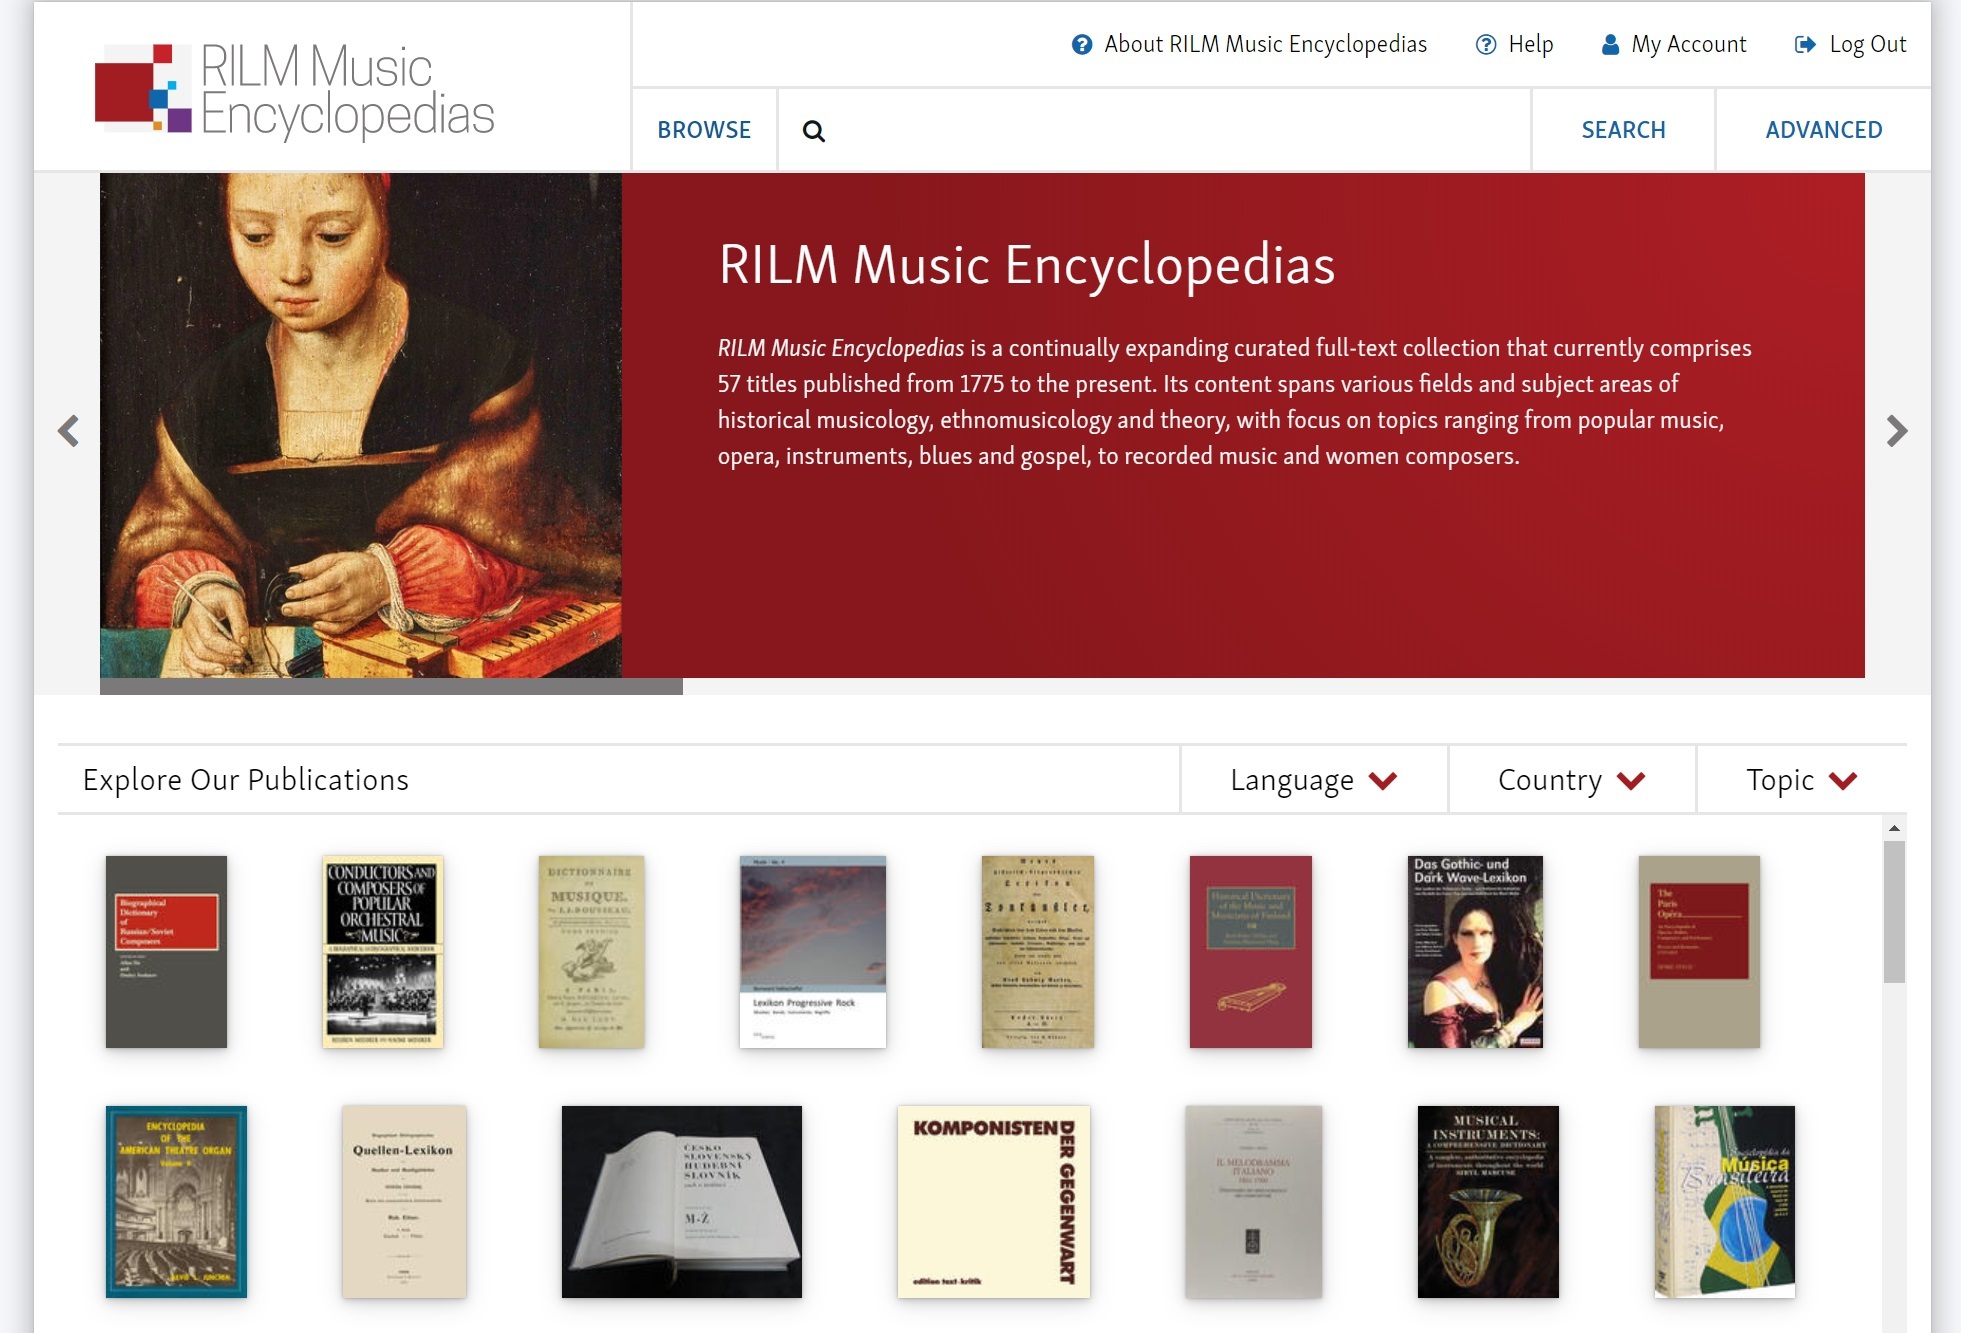 rilm music encyclopedias on egret website homepage with gallery of encyclopedia covers